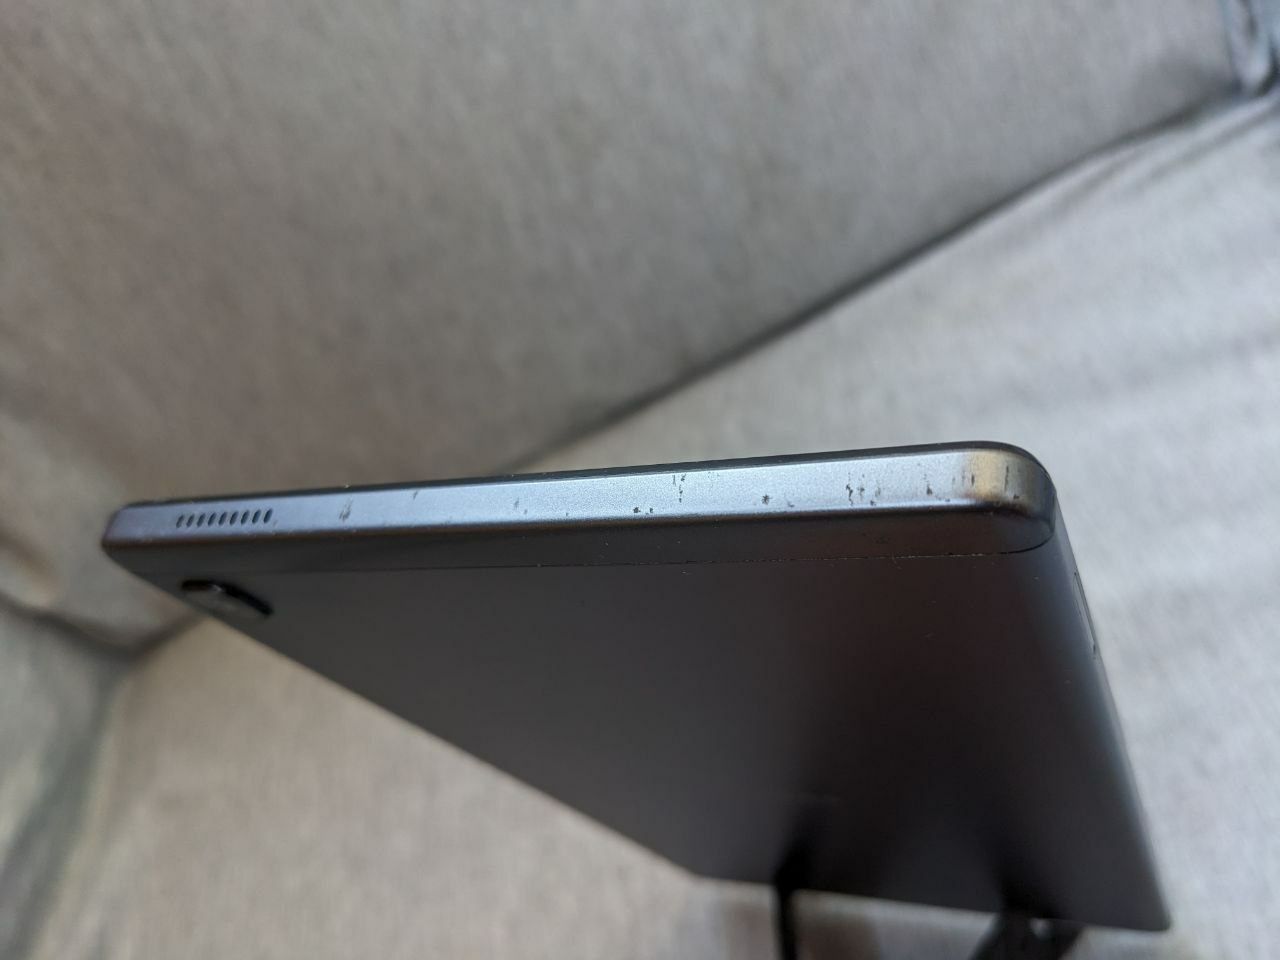 Samsung Galaxy Tab A7 Lite 4/64